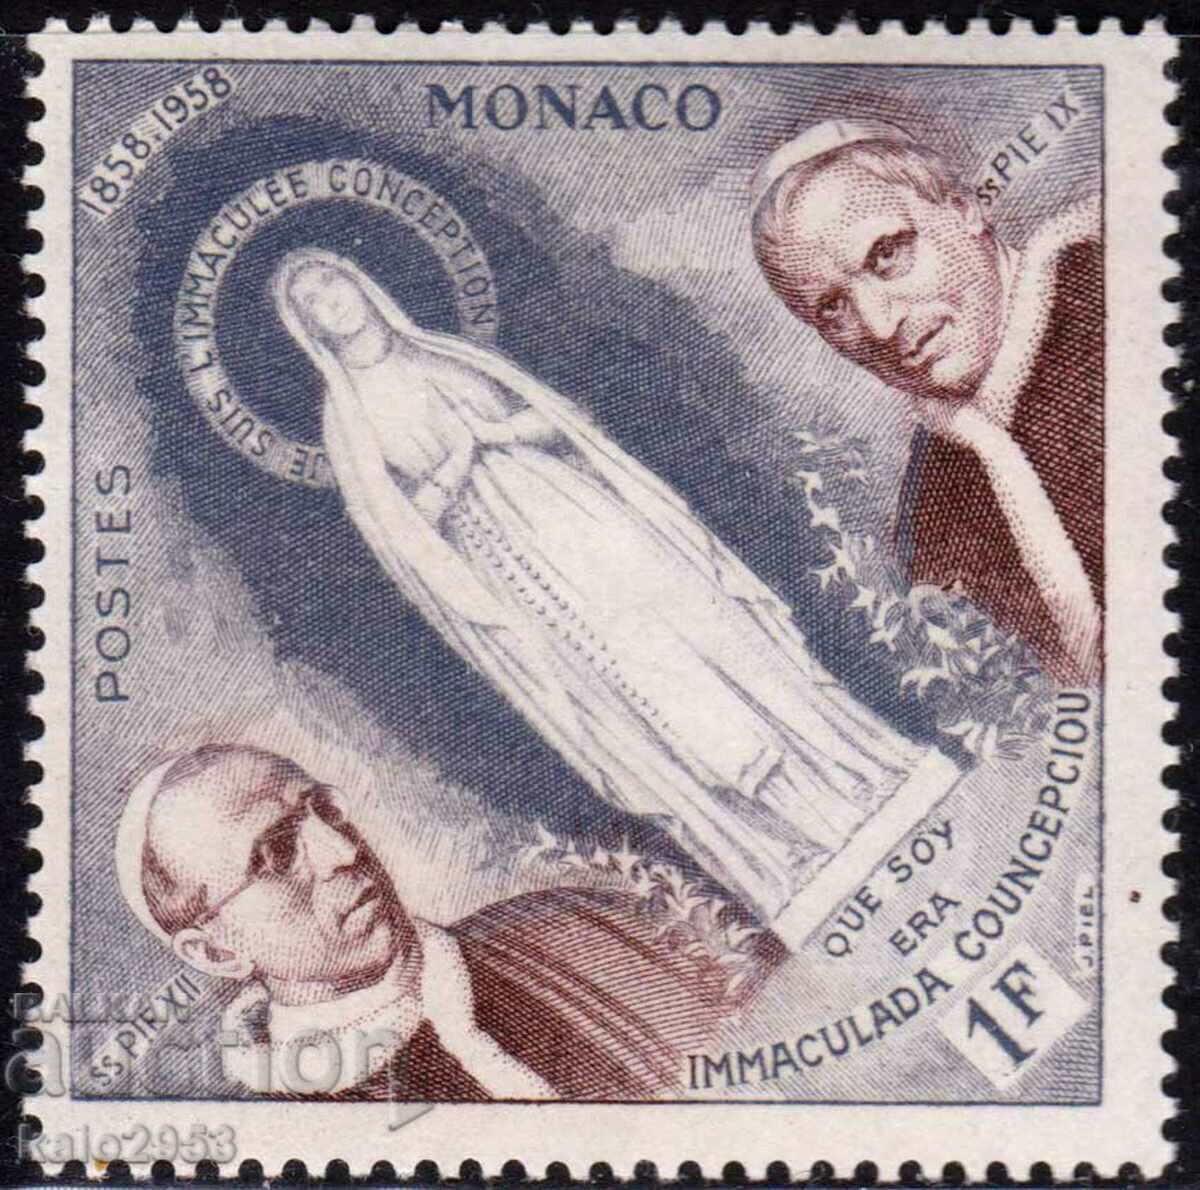 Monaco-1958-Jubileu religios, MLH